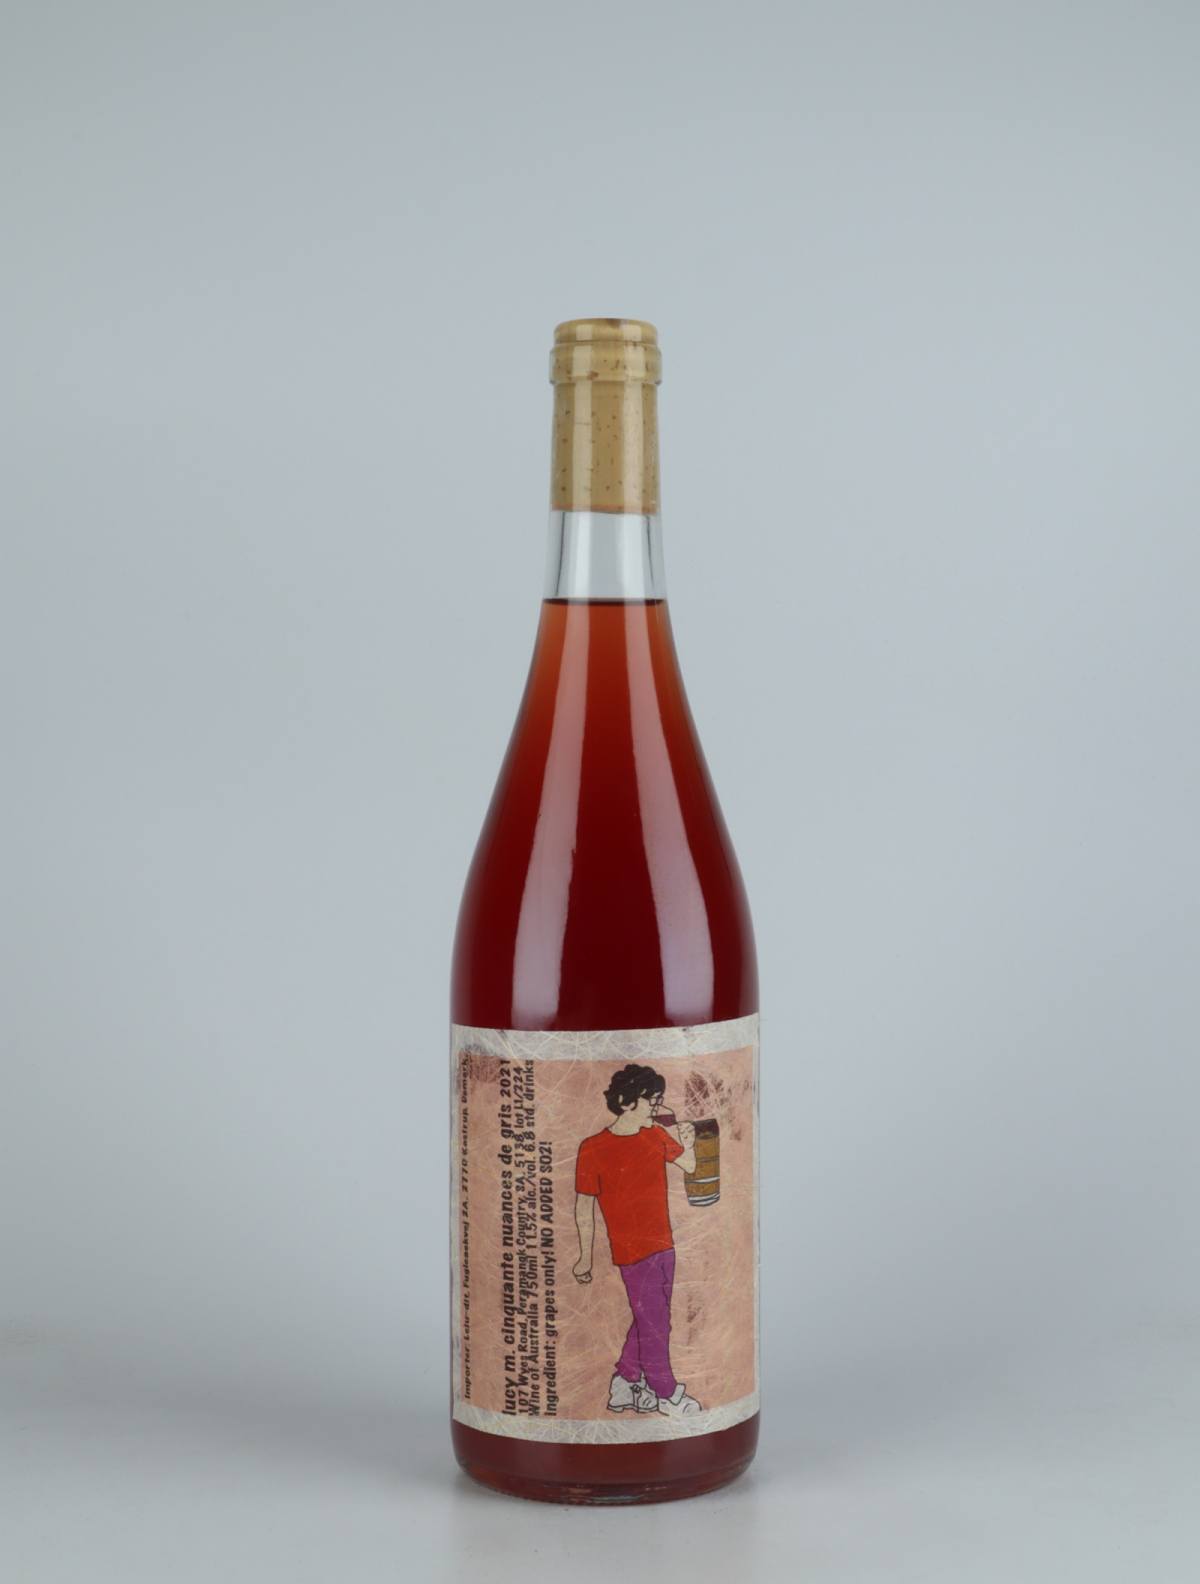 En flaske 2021 Cinquante Nuances de Gris Orange vin fra Lucy Margaux, Adelaide Hills i Australien